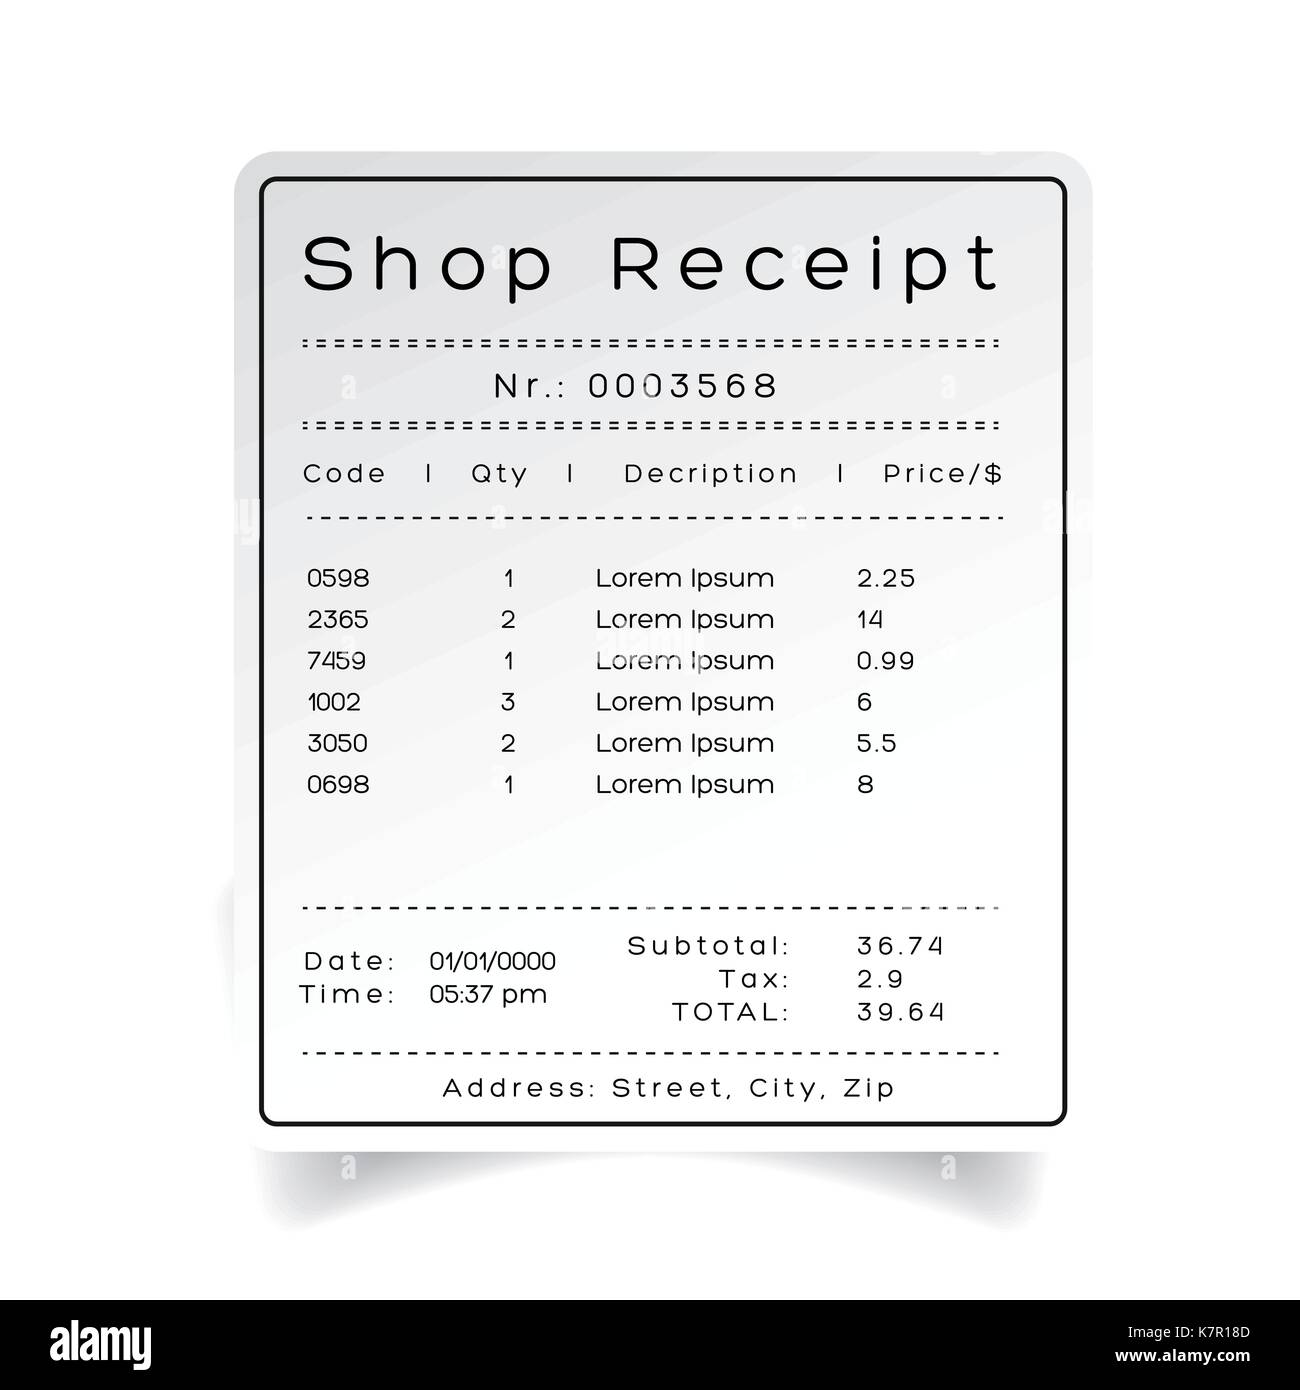 shop-receipt-template-vector-sticker-stock-vector-image-art-alamy